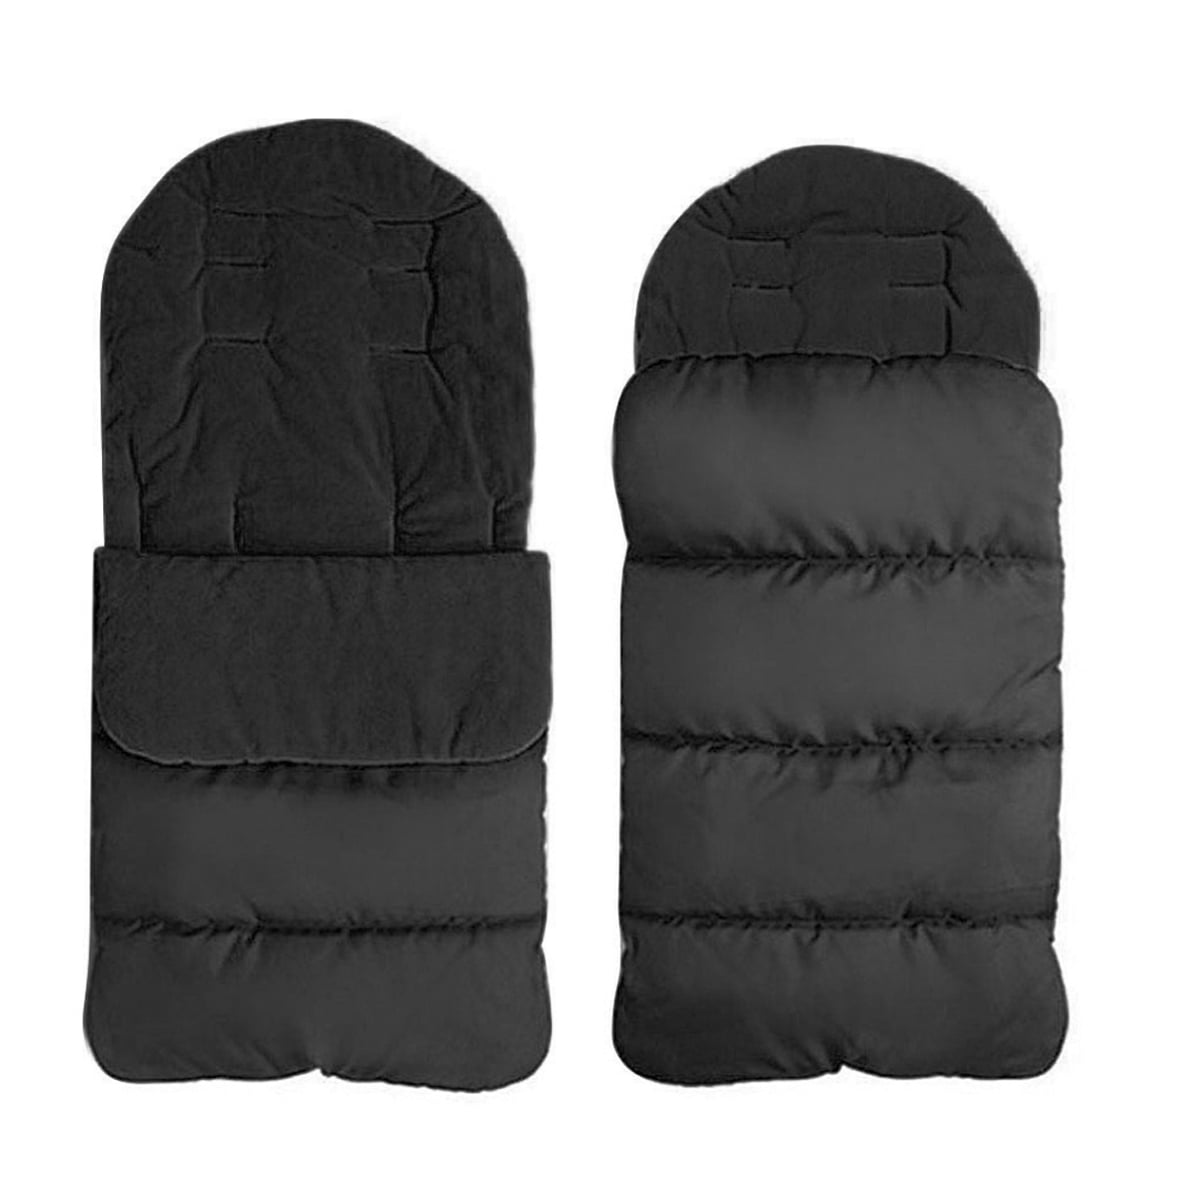 Baby Down Sleeping Bag For infant Stroller Carseat Footmuff Warm Winter Warm Bunting Bag 